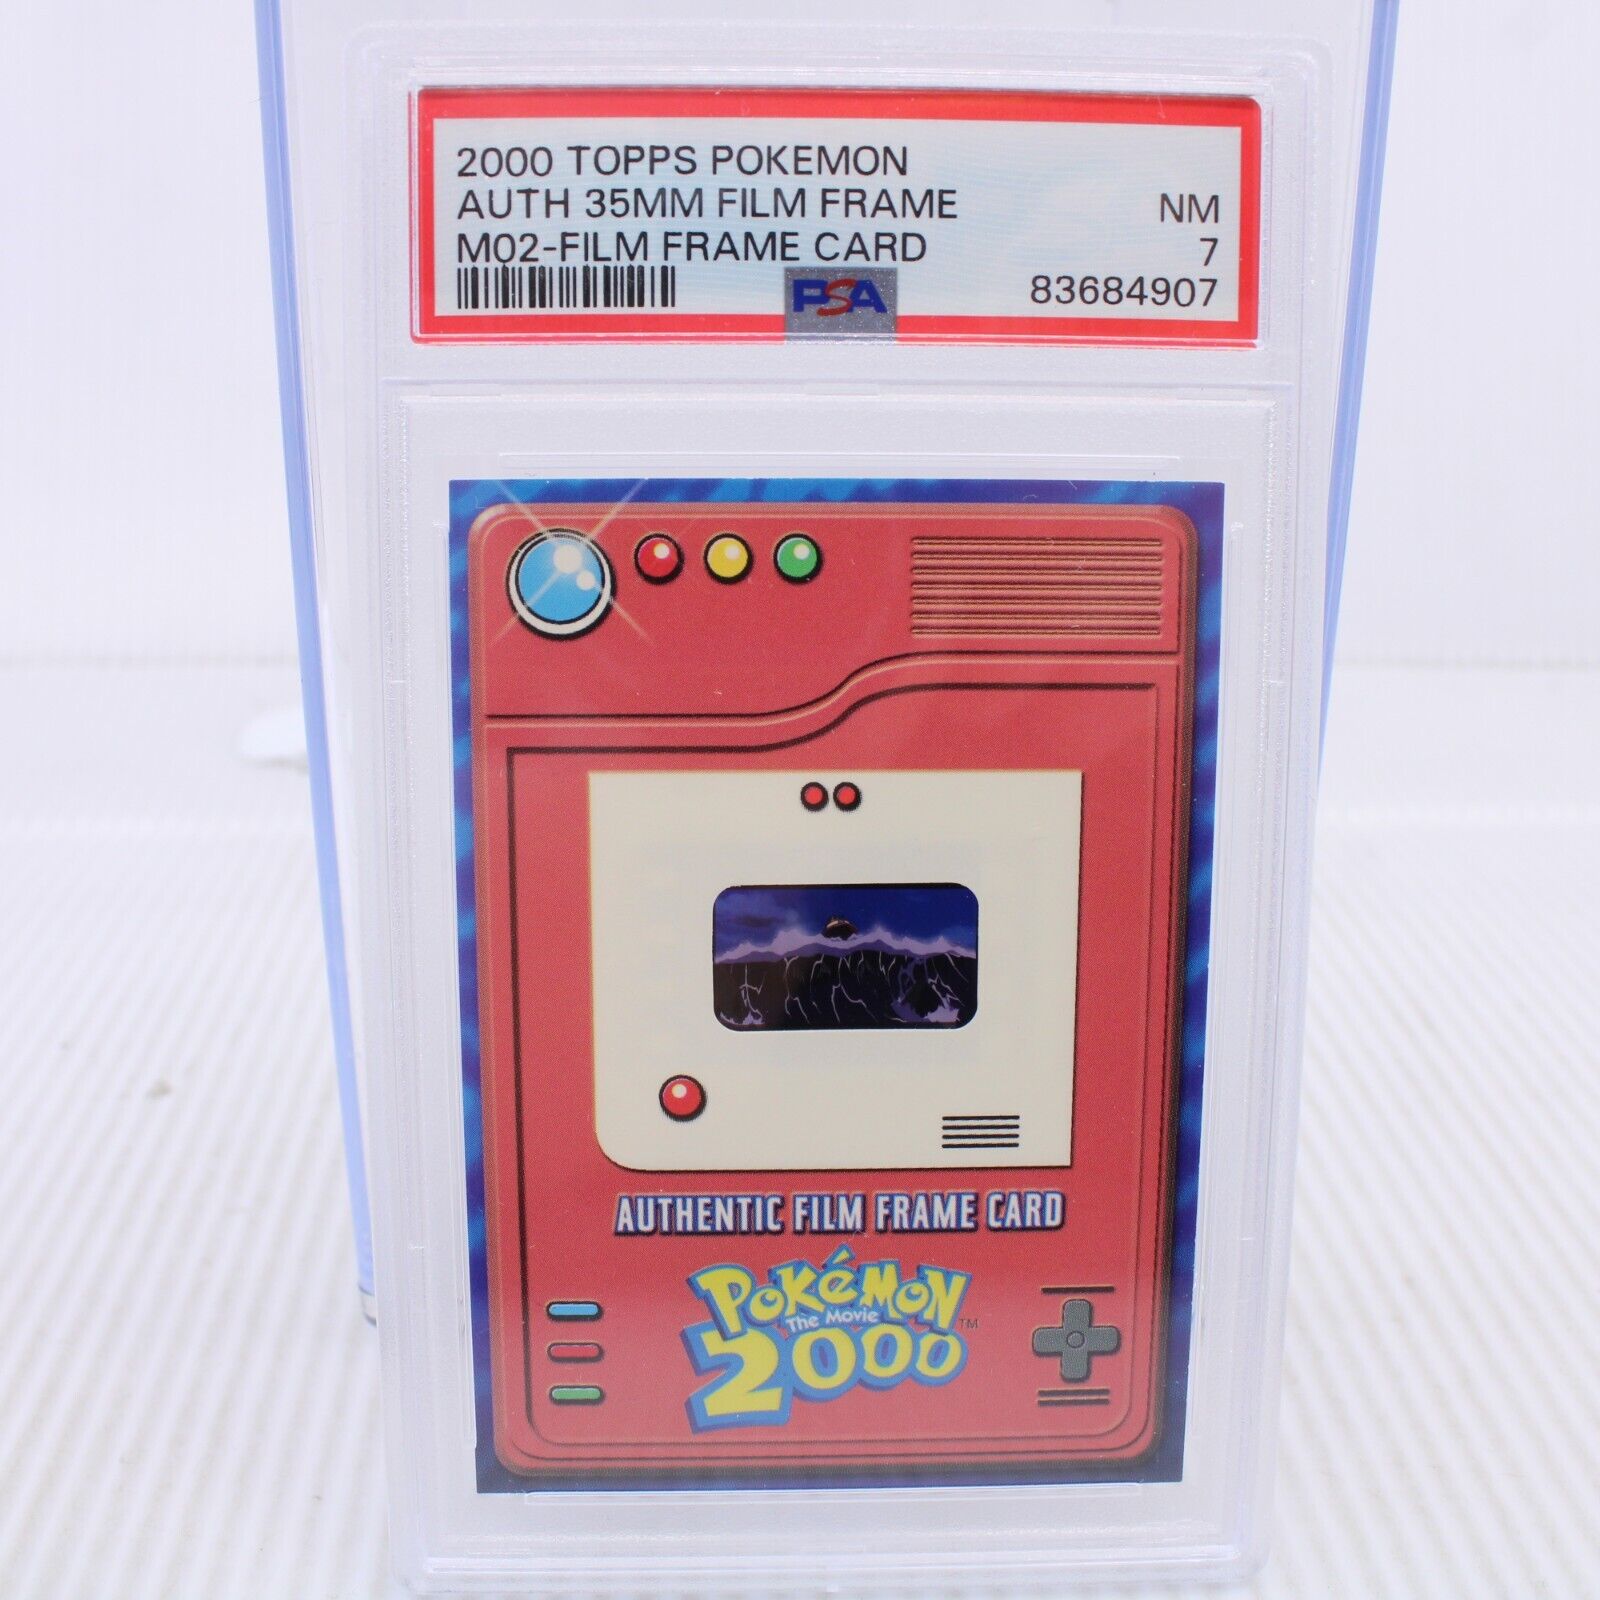 A7 Topps Pokemon Auth 35MM Film Frame Card NM PSA 7